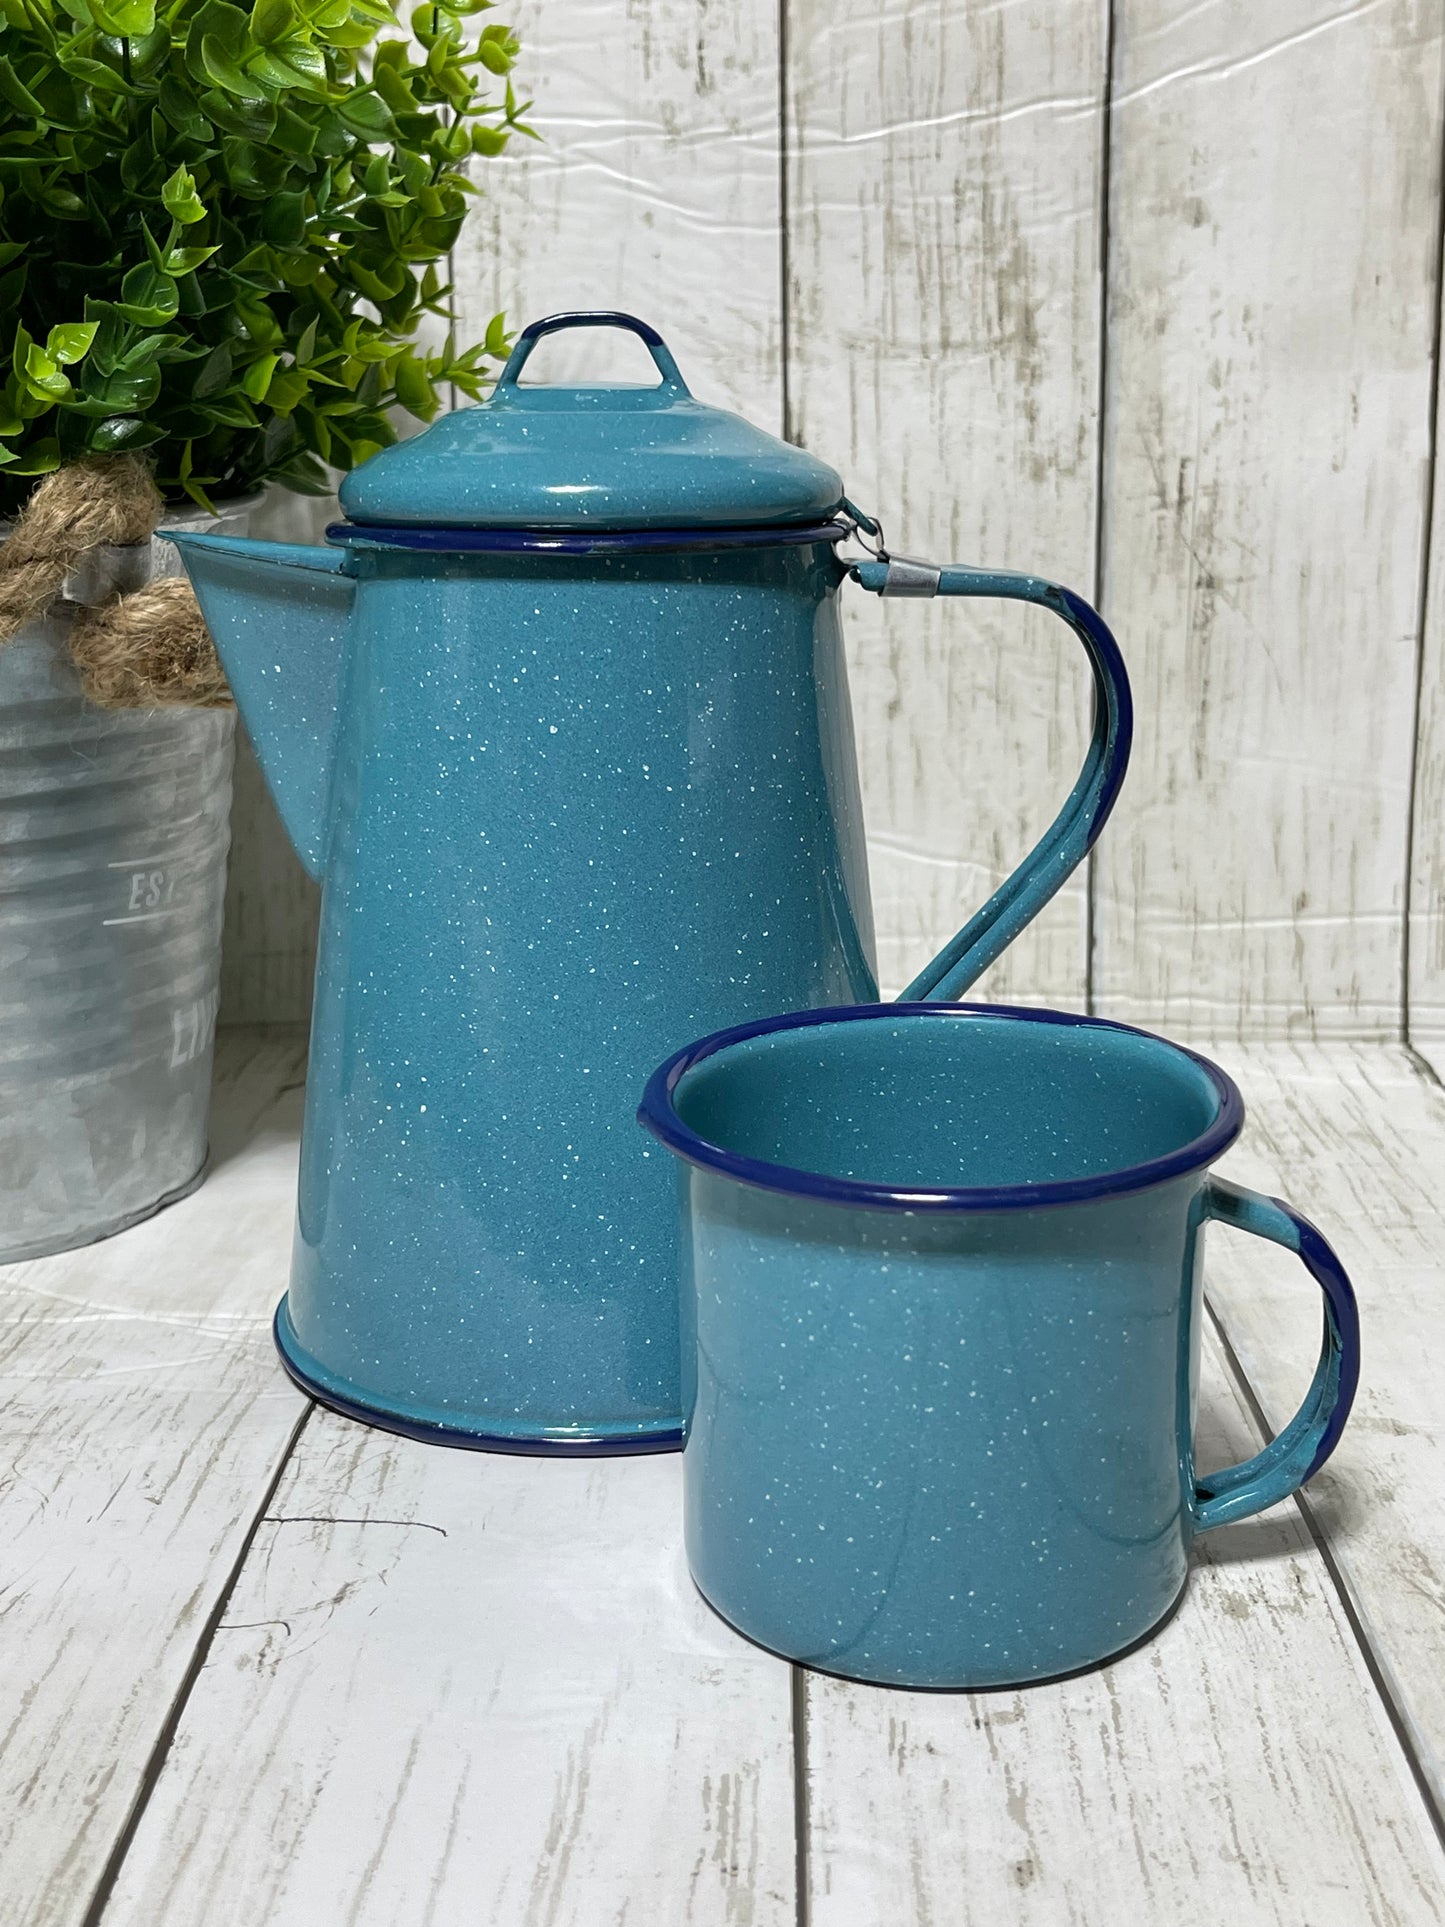 Authentic vintage blue steel-coffee maker pitcher/jar/cafetera peltre